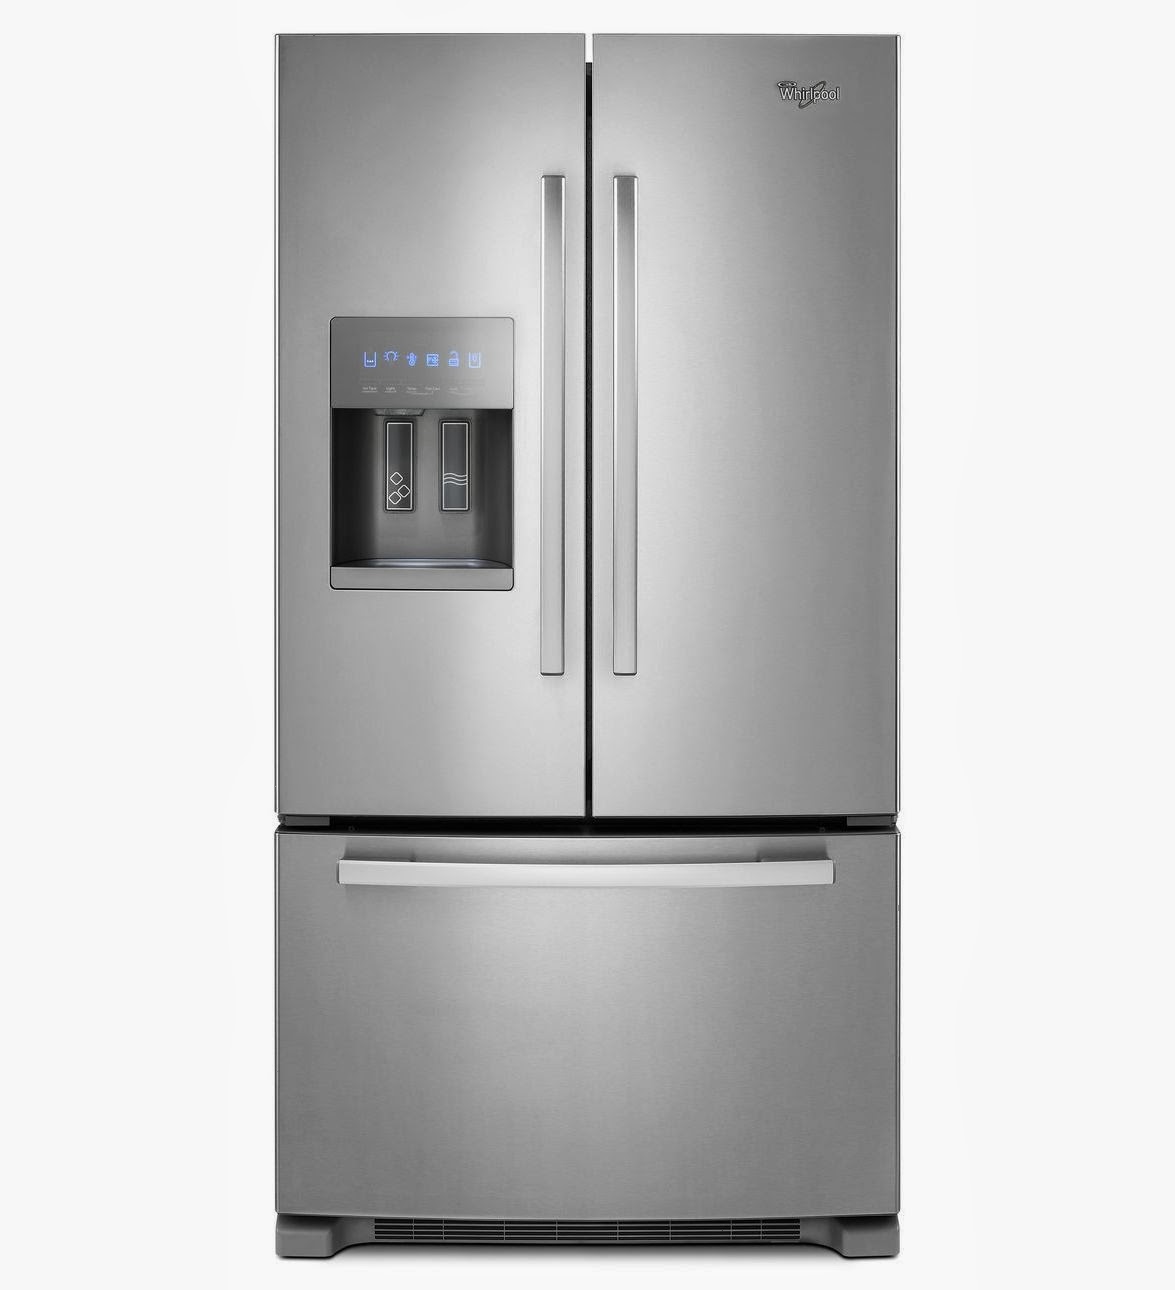 Whirlpool Refrigerator Brand: GI6FARXXF Bottom Mount Refrigerator